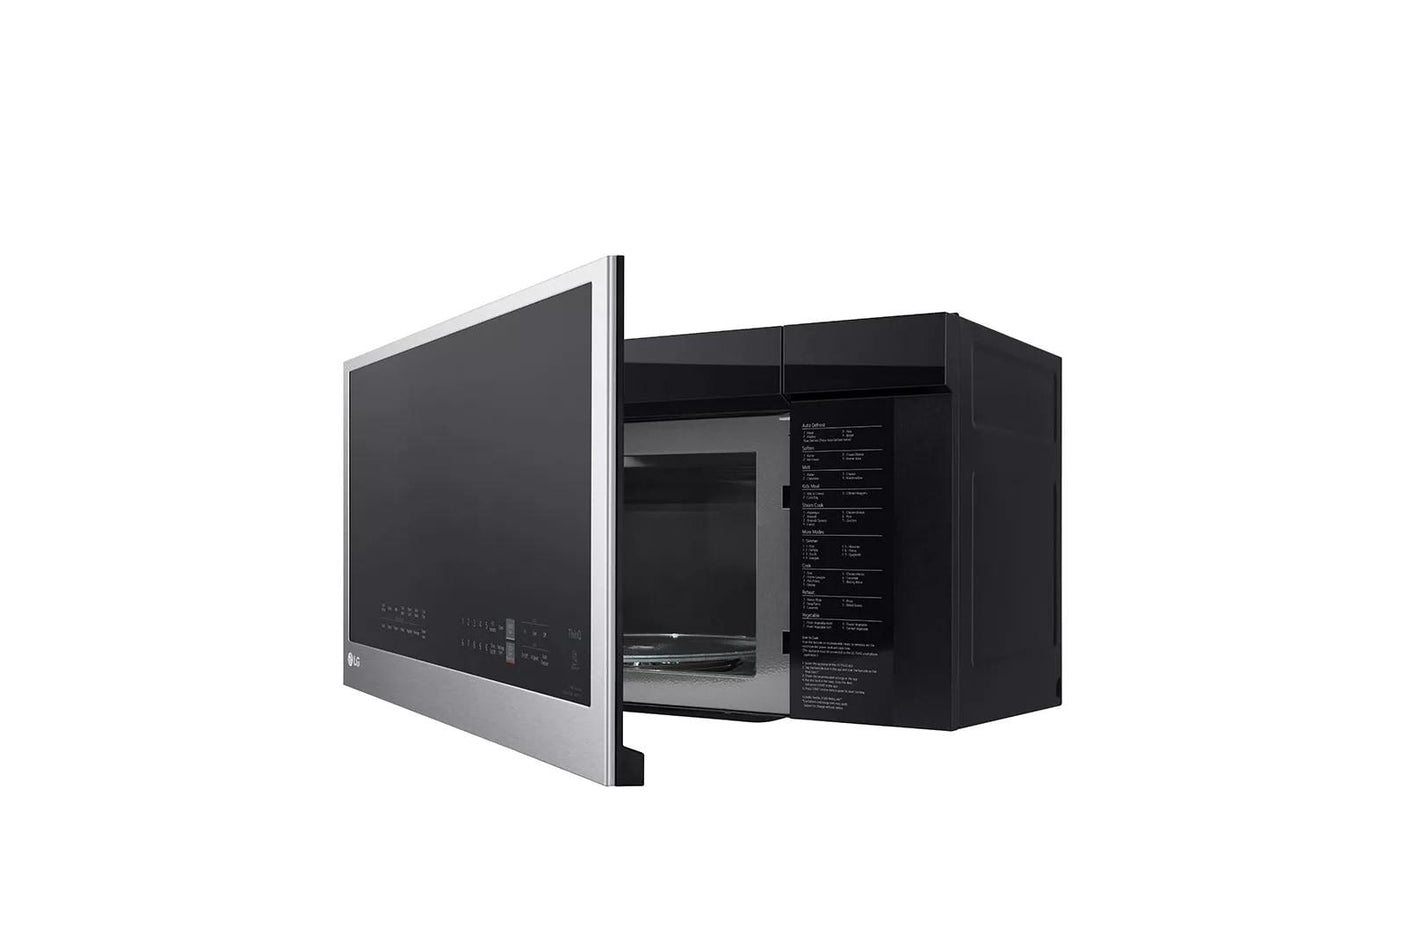 2.0 cu. ft. Smart Over-the-Range Microwave